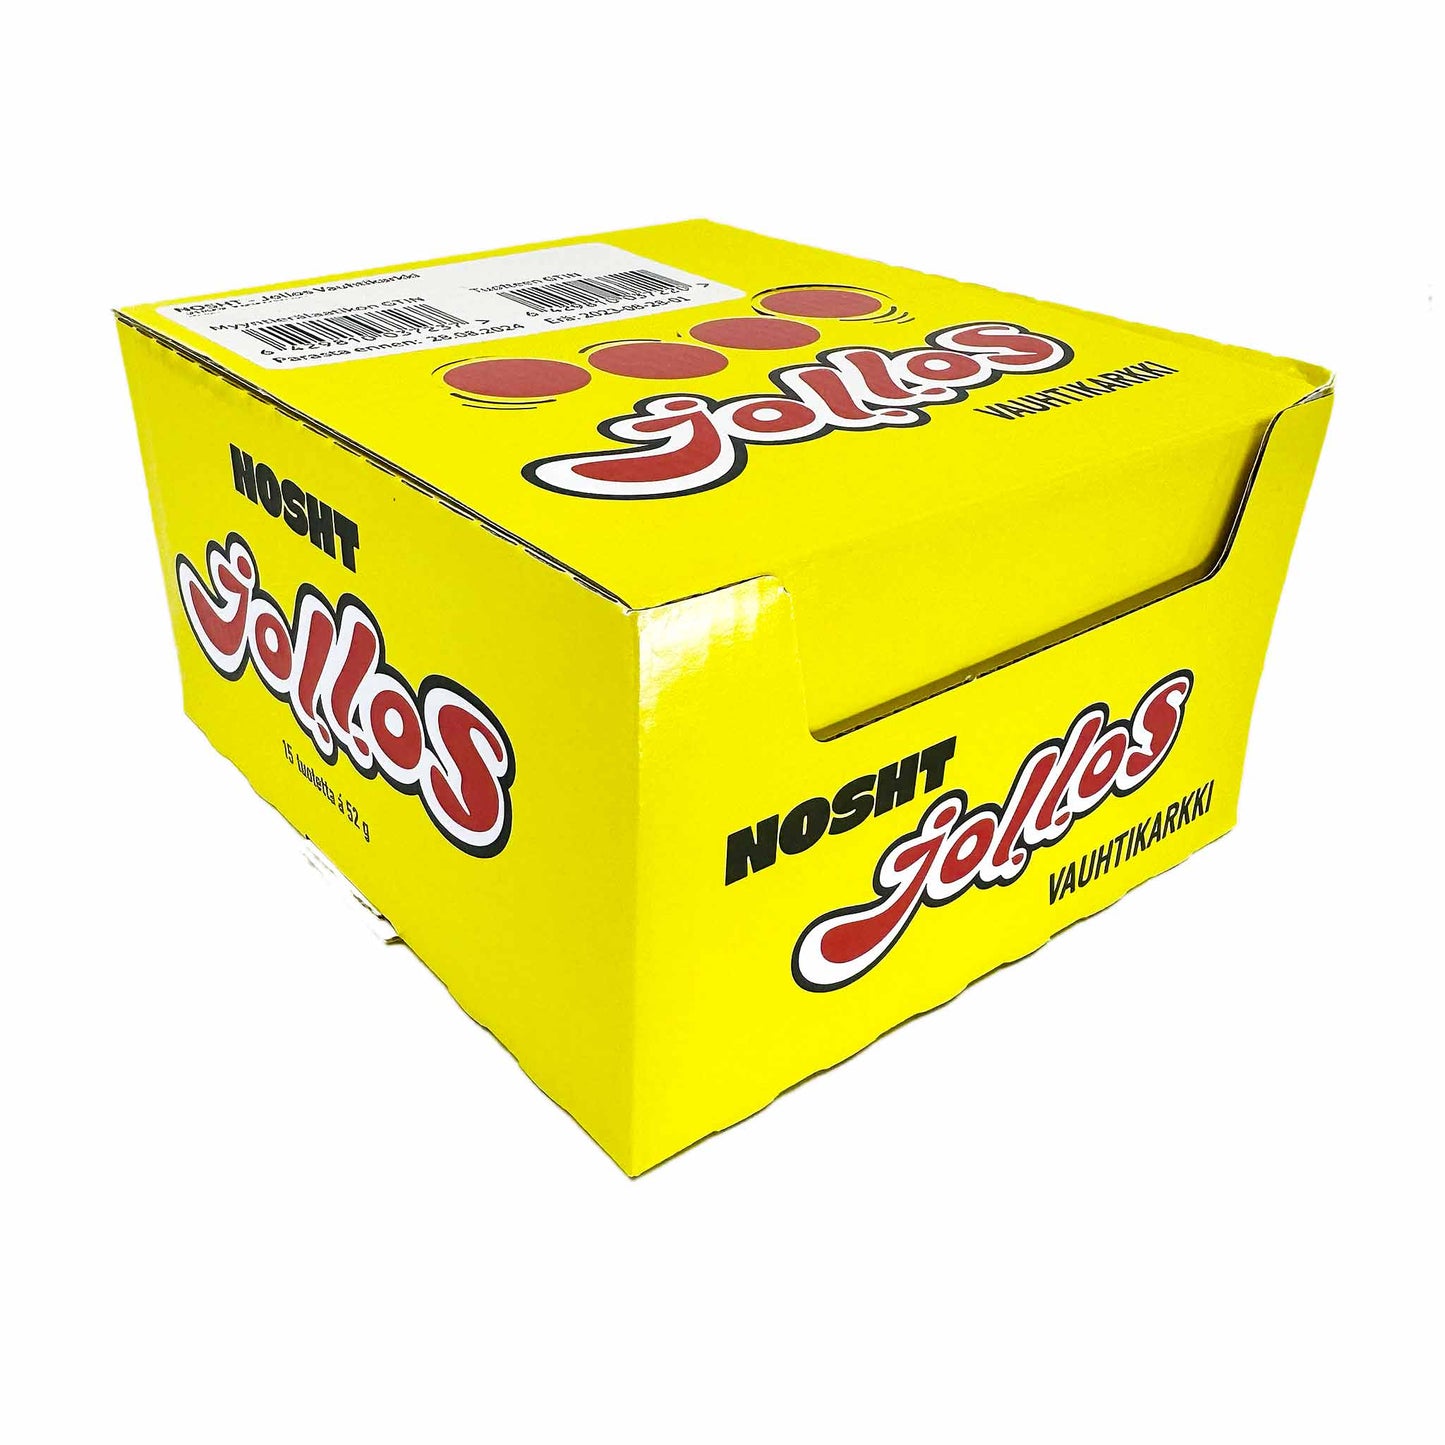 Nosht Jollos Energy Chews - Lemon Iced Tea - Box of 15 servings